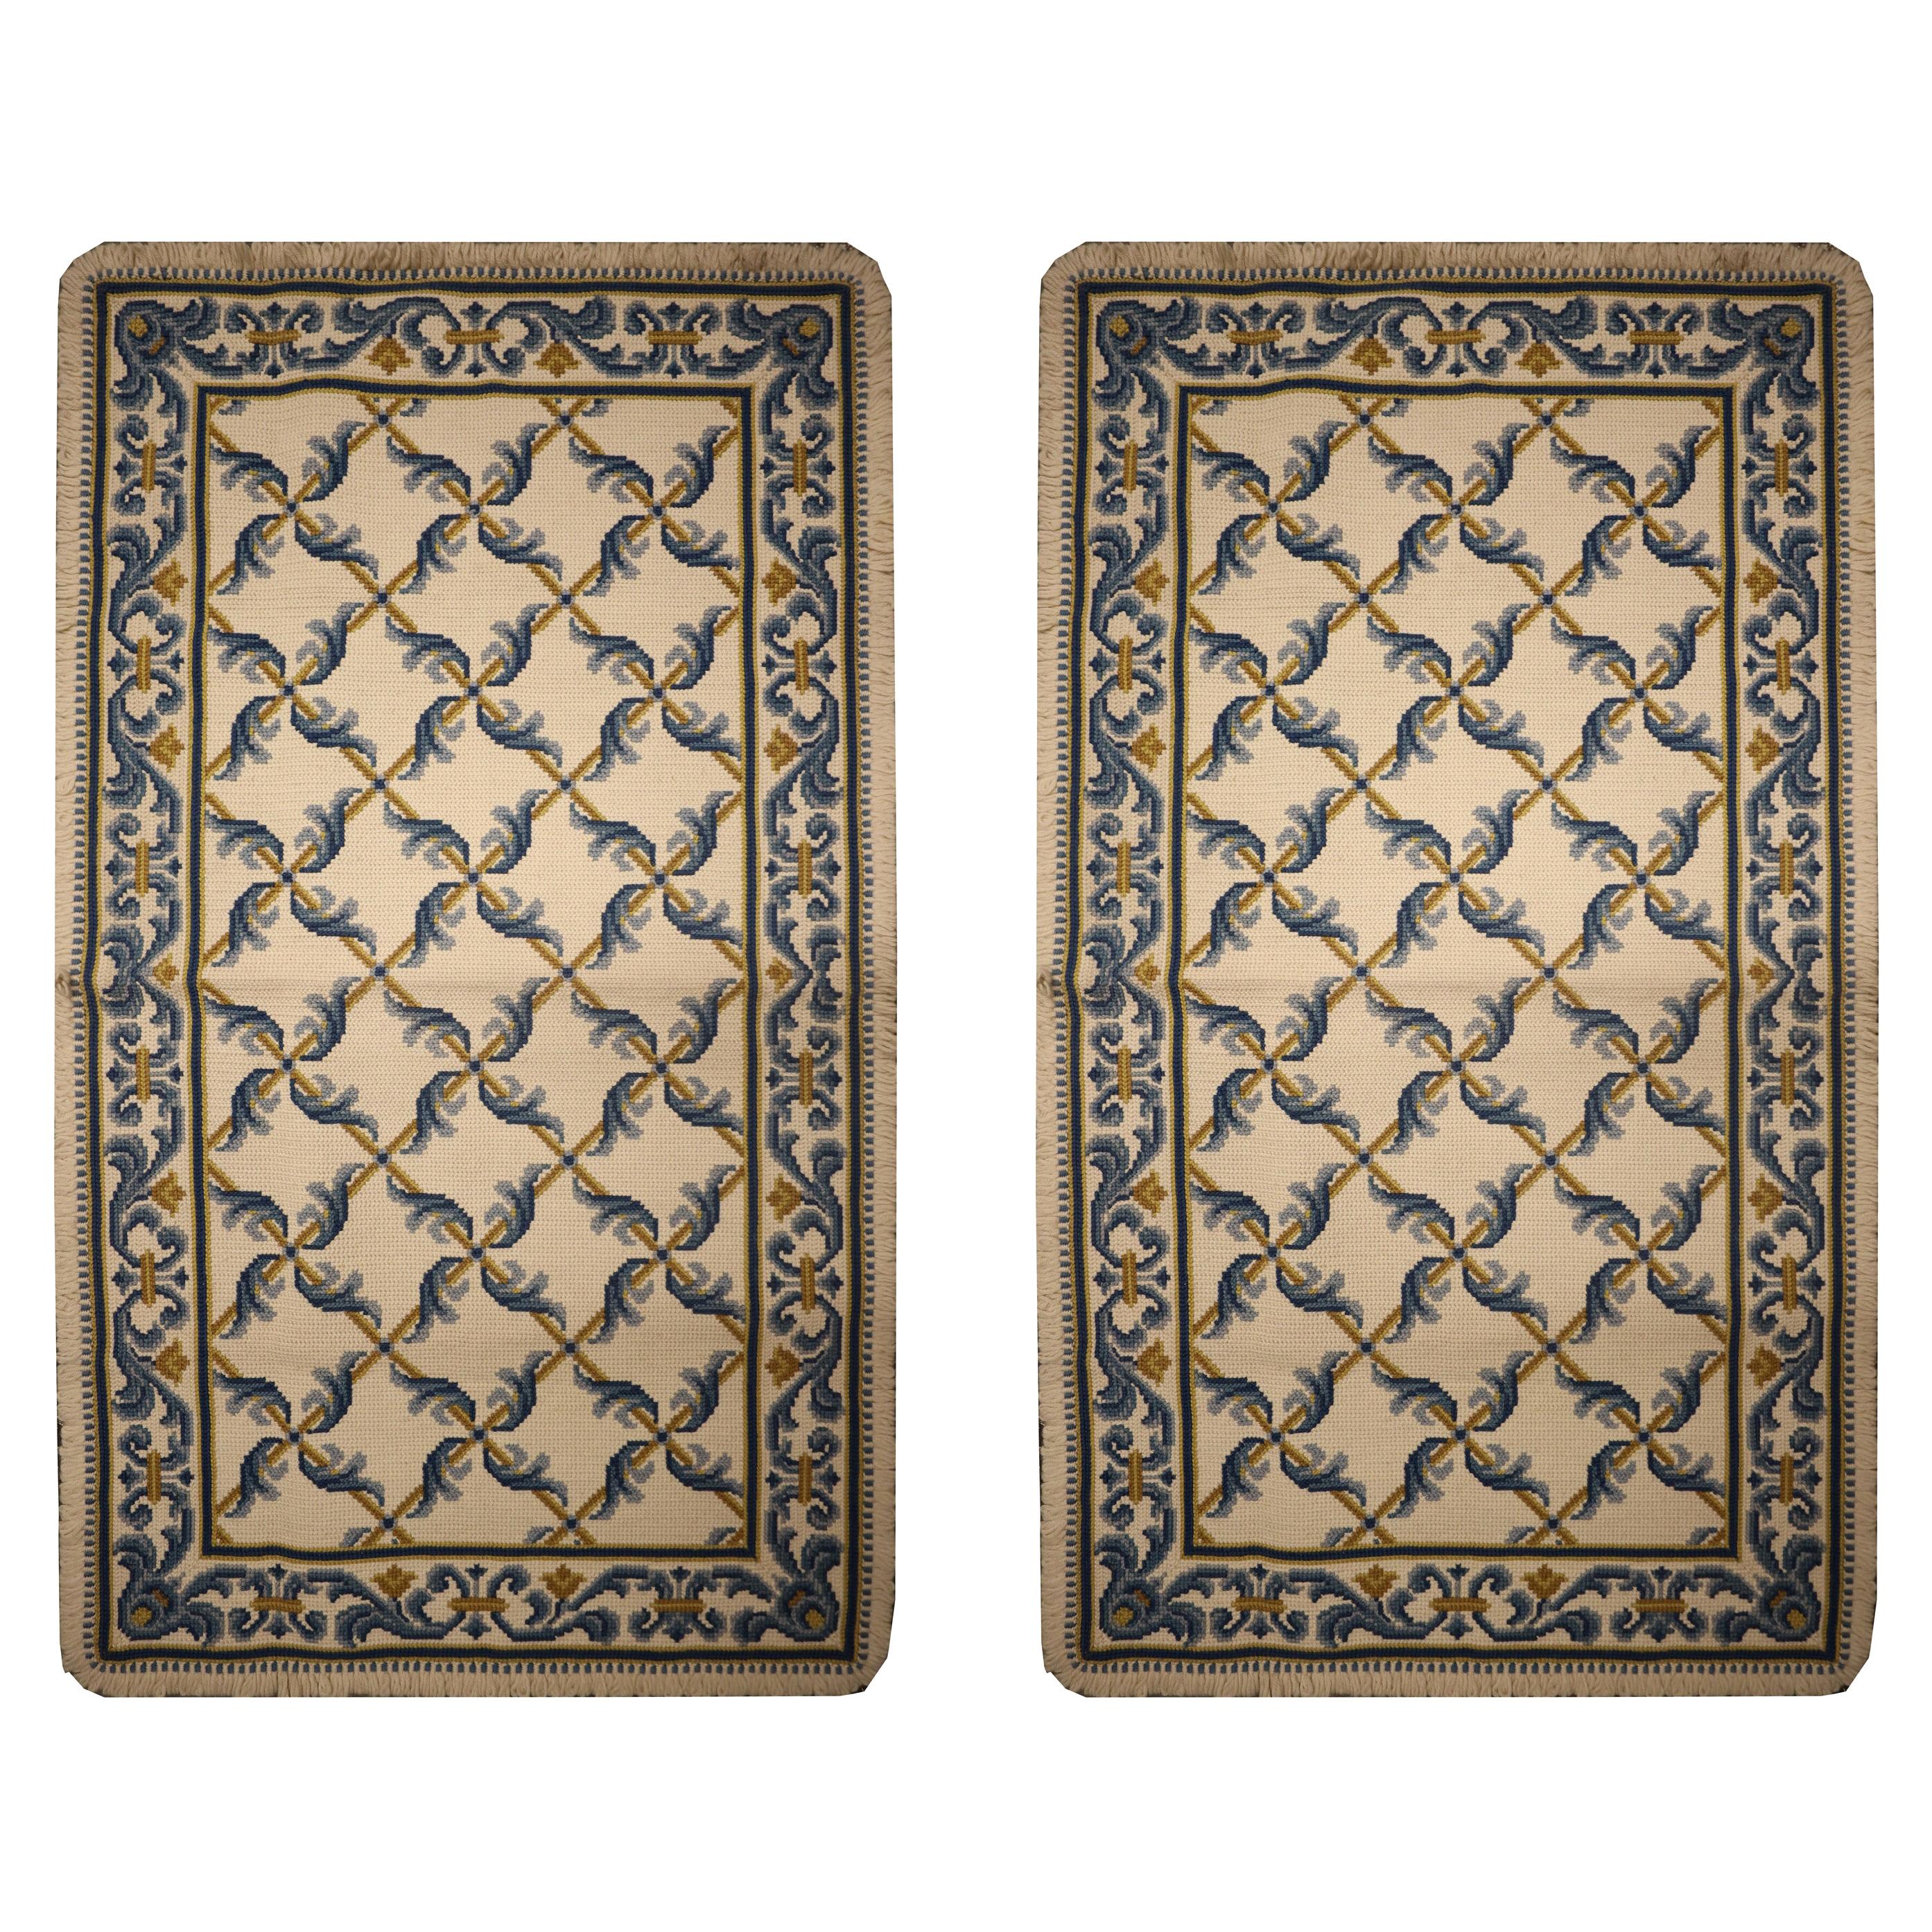 Pair of Handmade Needlepoint Rugs Symmetrical Traditional Design Carpet